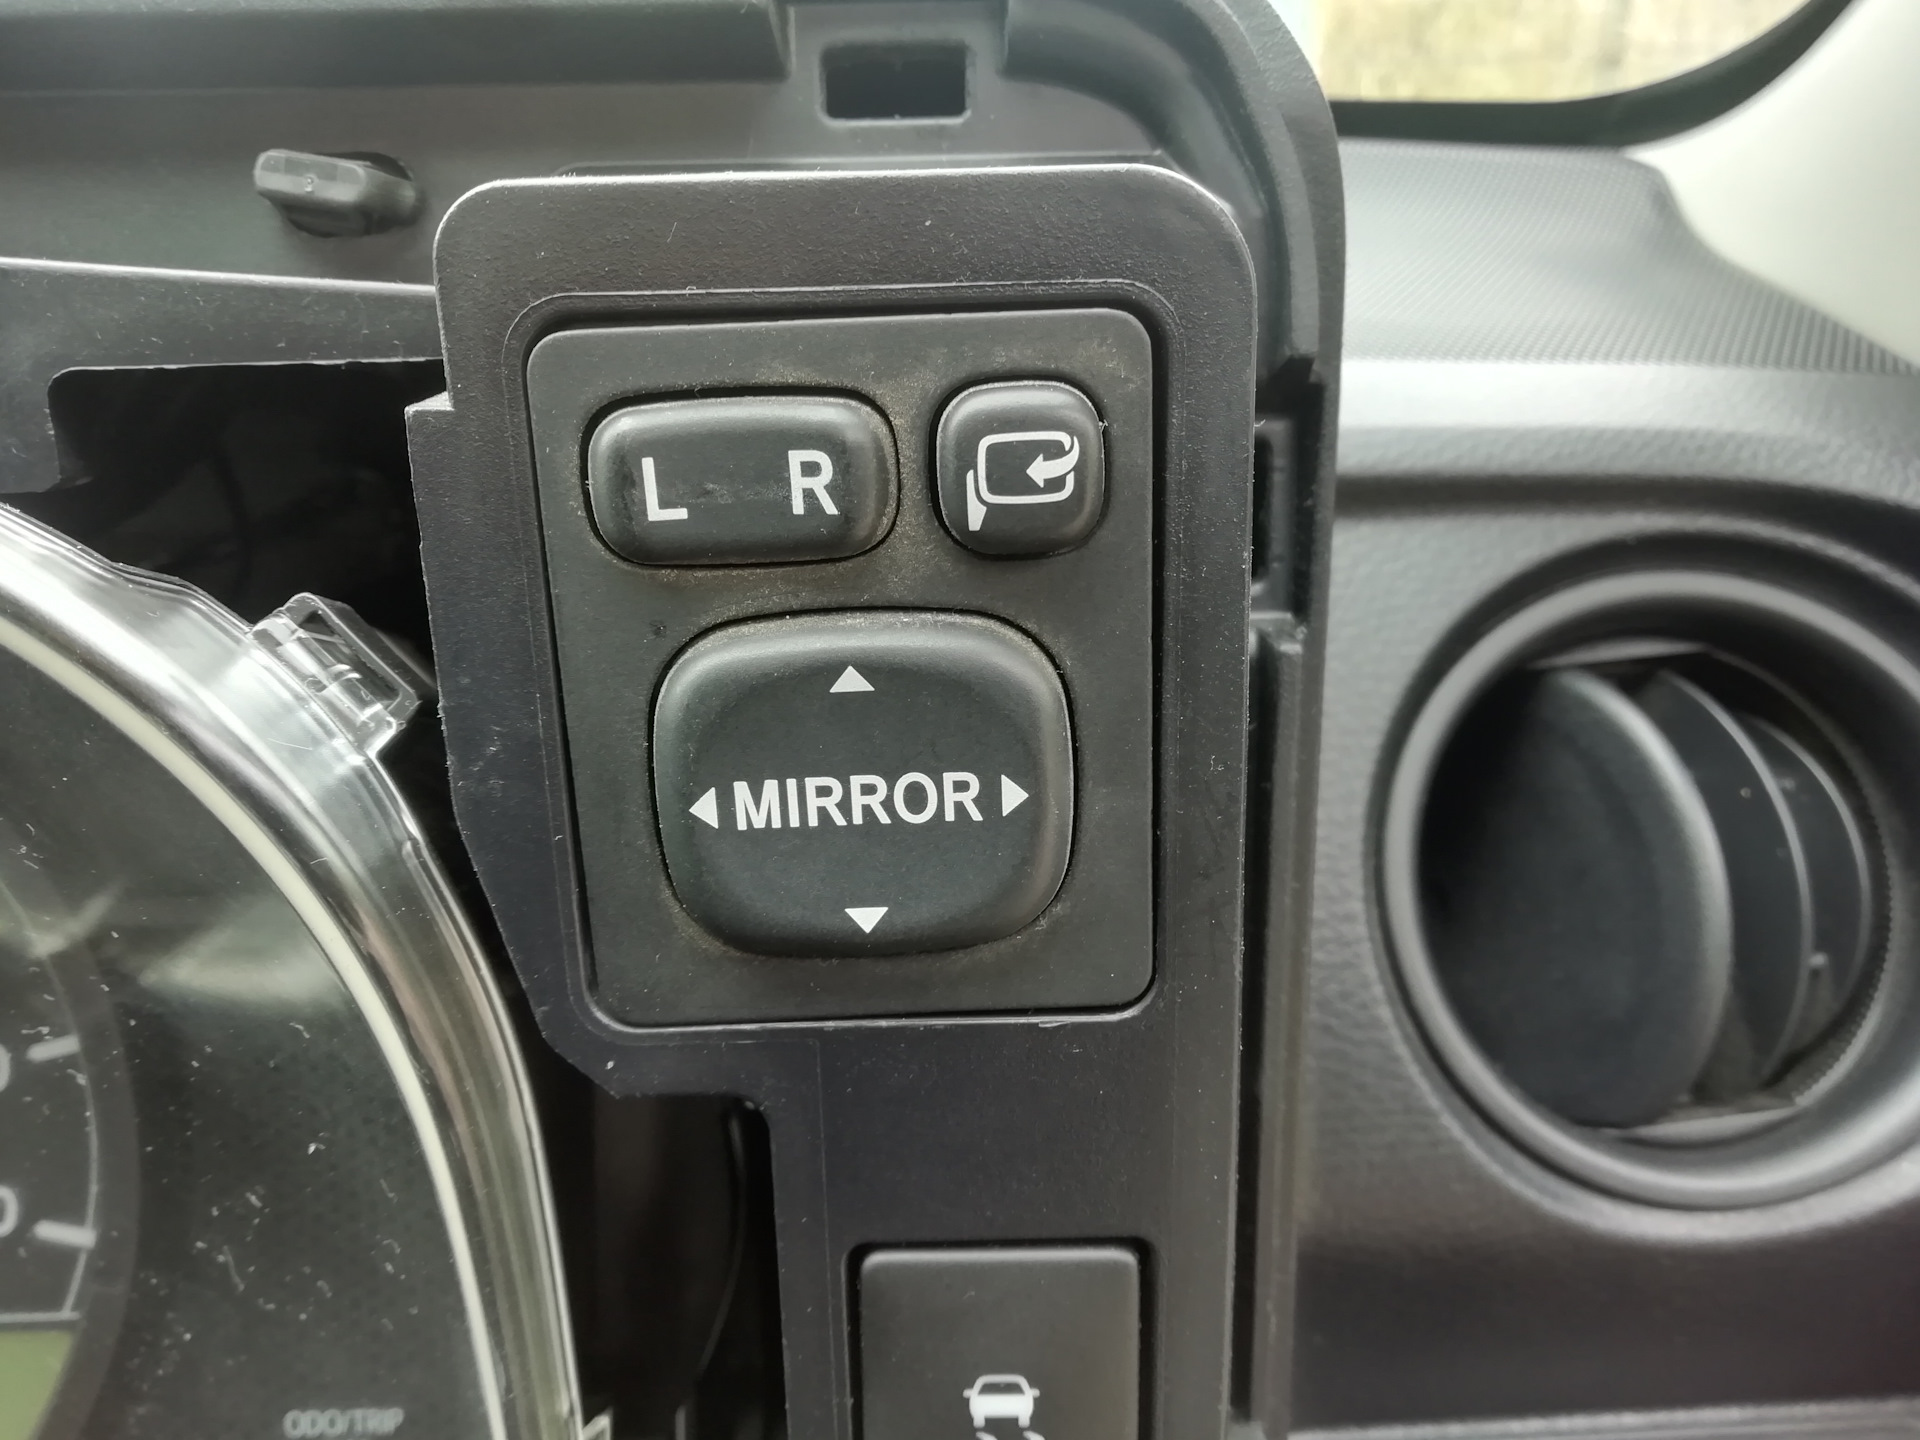 Складывание зеркал Аутлендер 3. Кнопка складывания зеркал Suzuki Grand Vitara. Кнопка складывания зеркал Киа Бонго. Subaru XV кнопка складывания зеркал. Отключение складывания зеркал